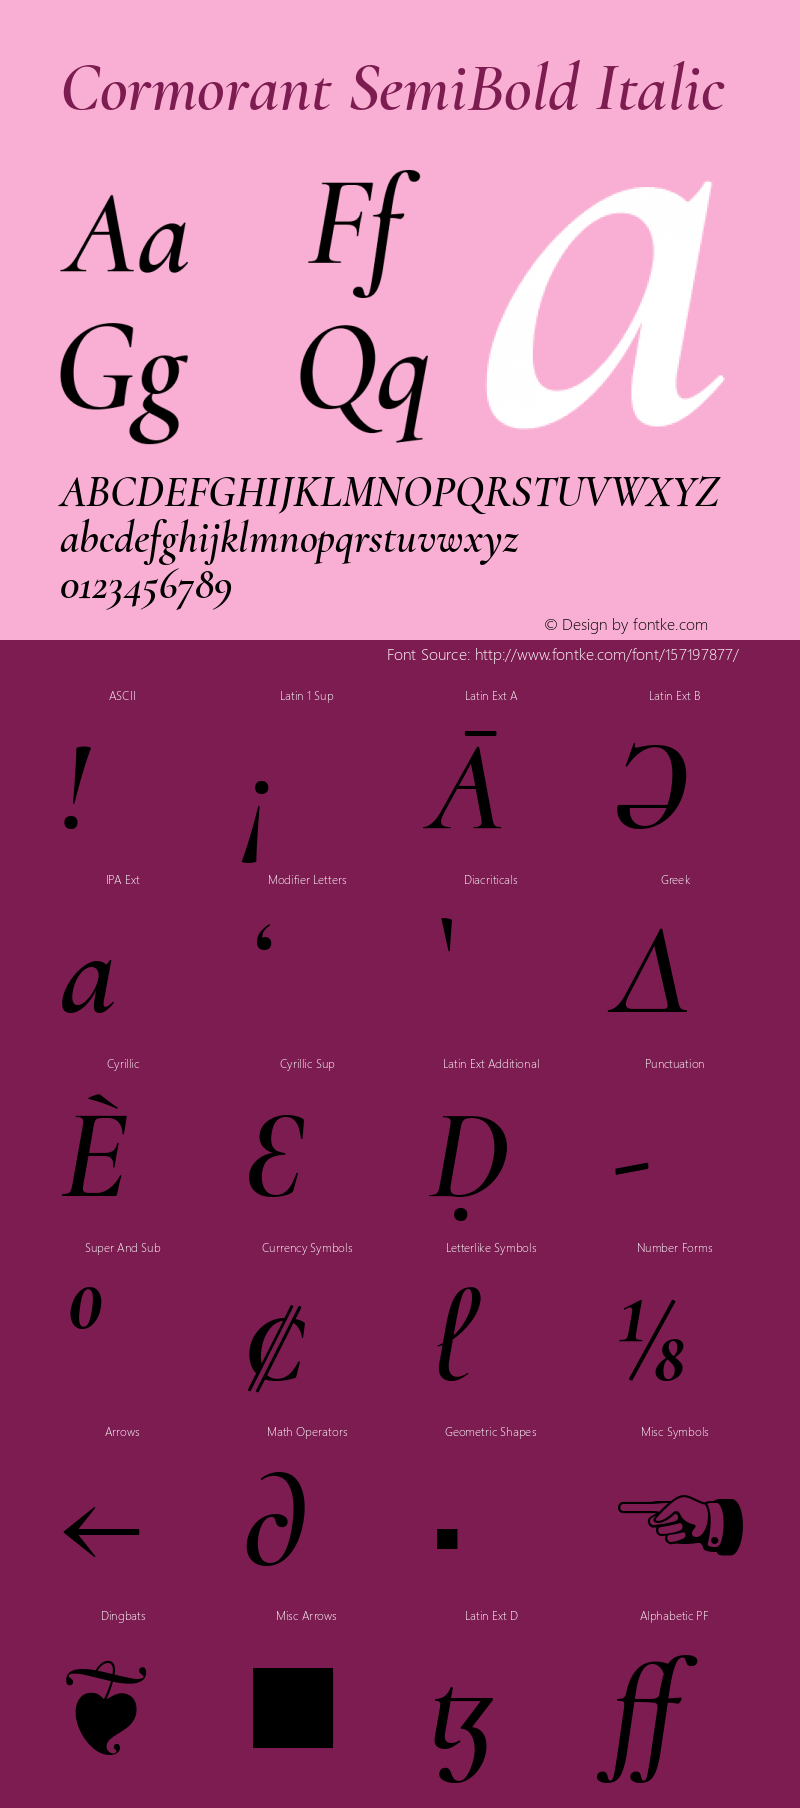 Cormorant SemiBold Italic Version 3.613 Font Sample